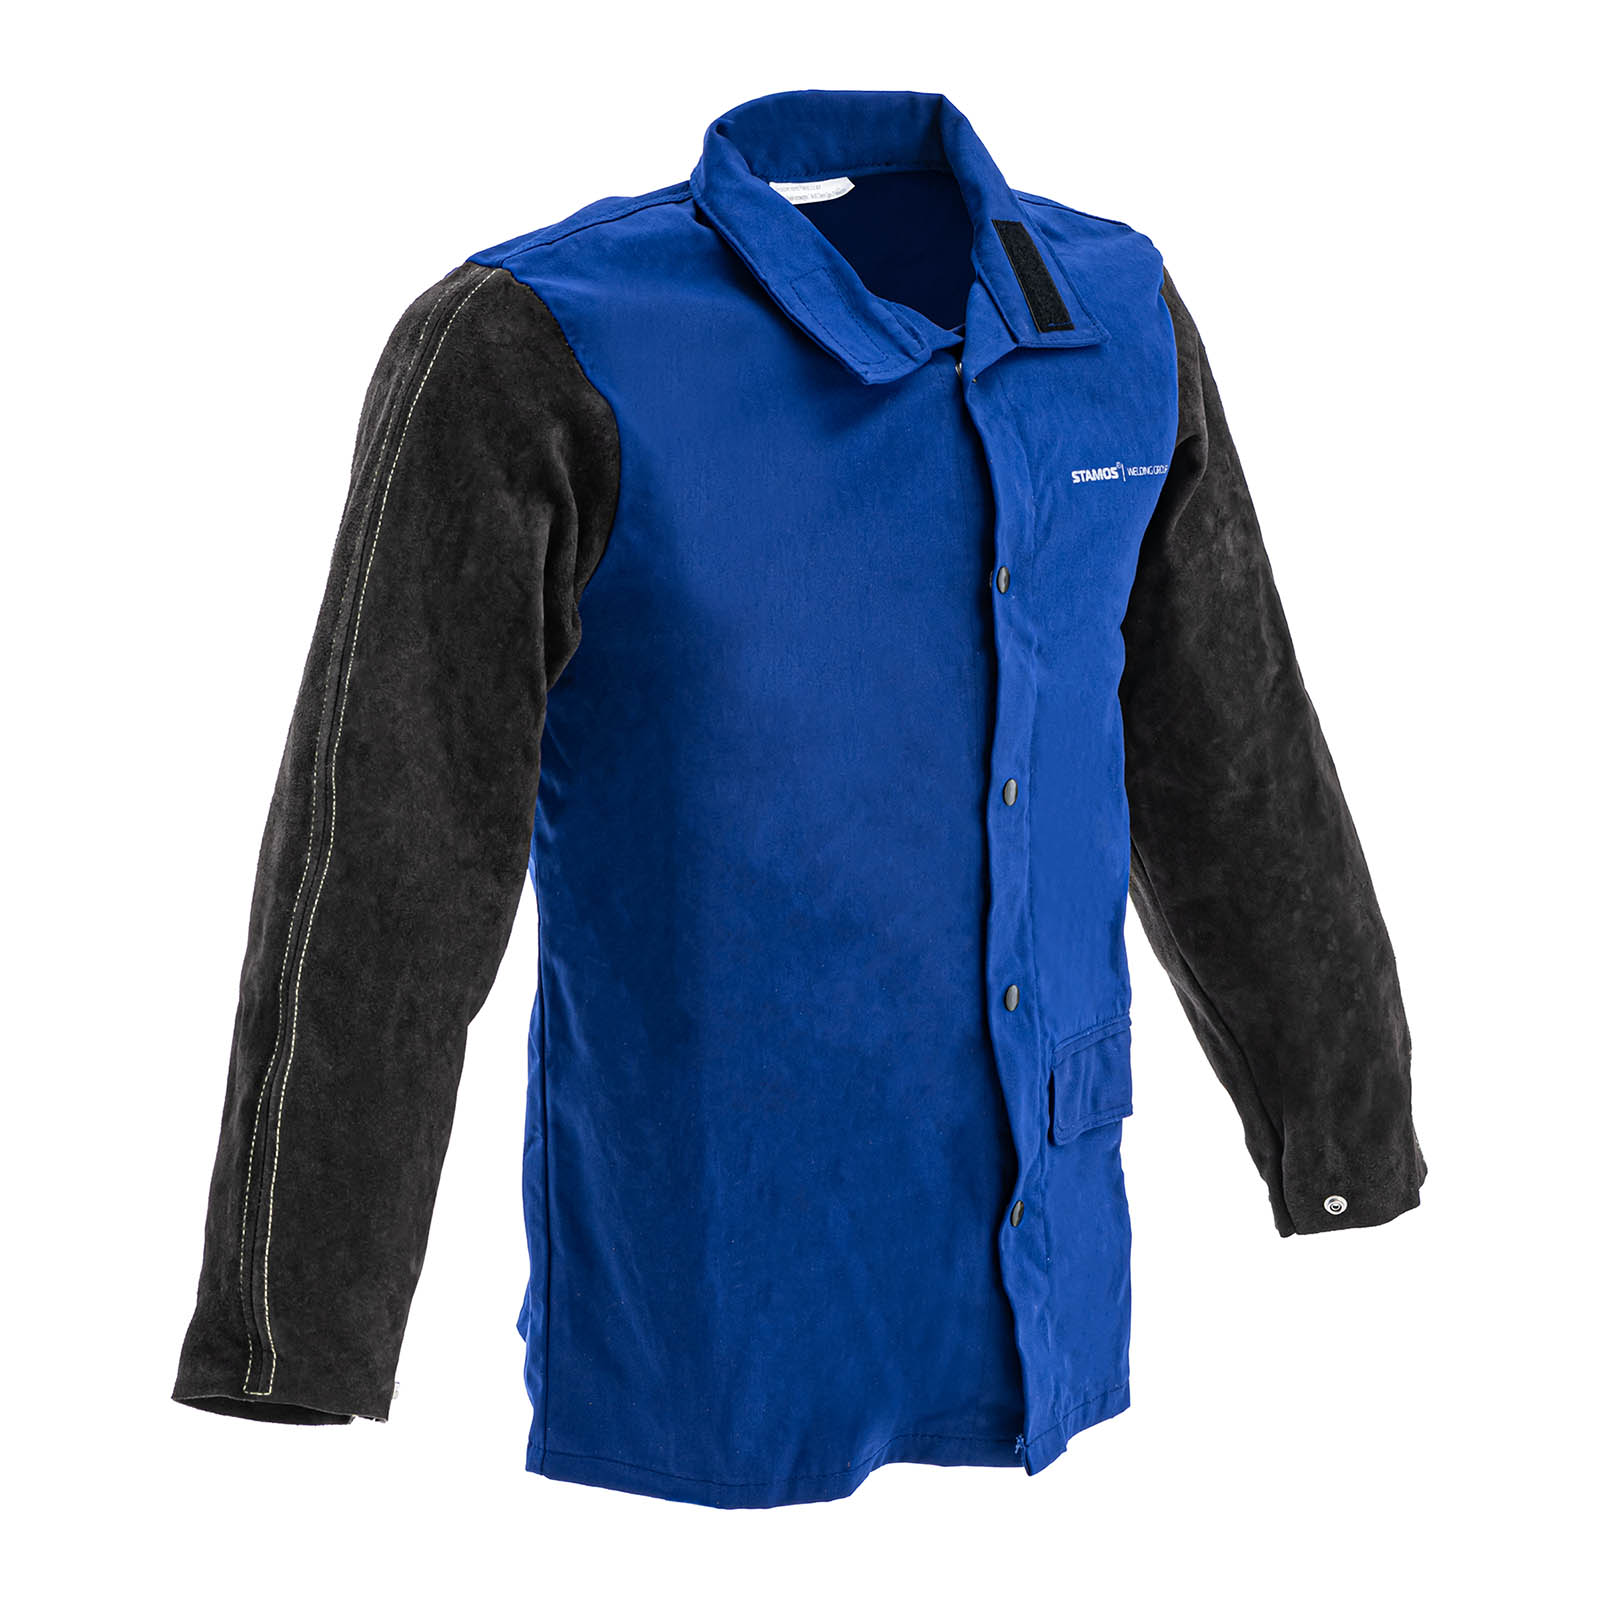 Welding Jacket - made of cotton sateen / cow split leather - size XL - black / blue